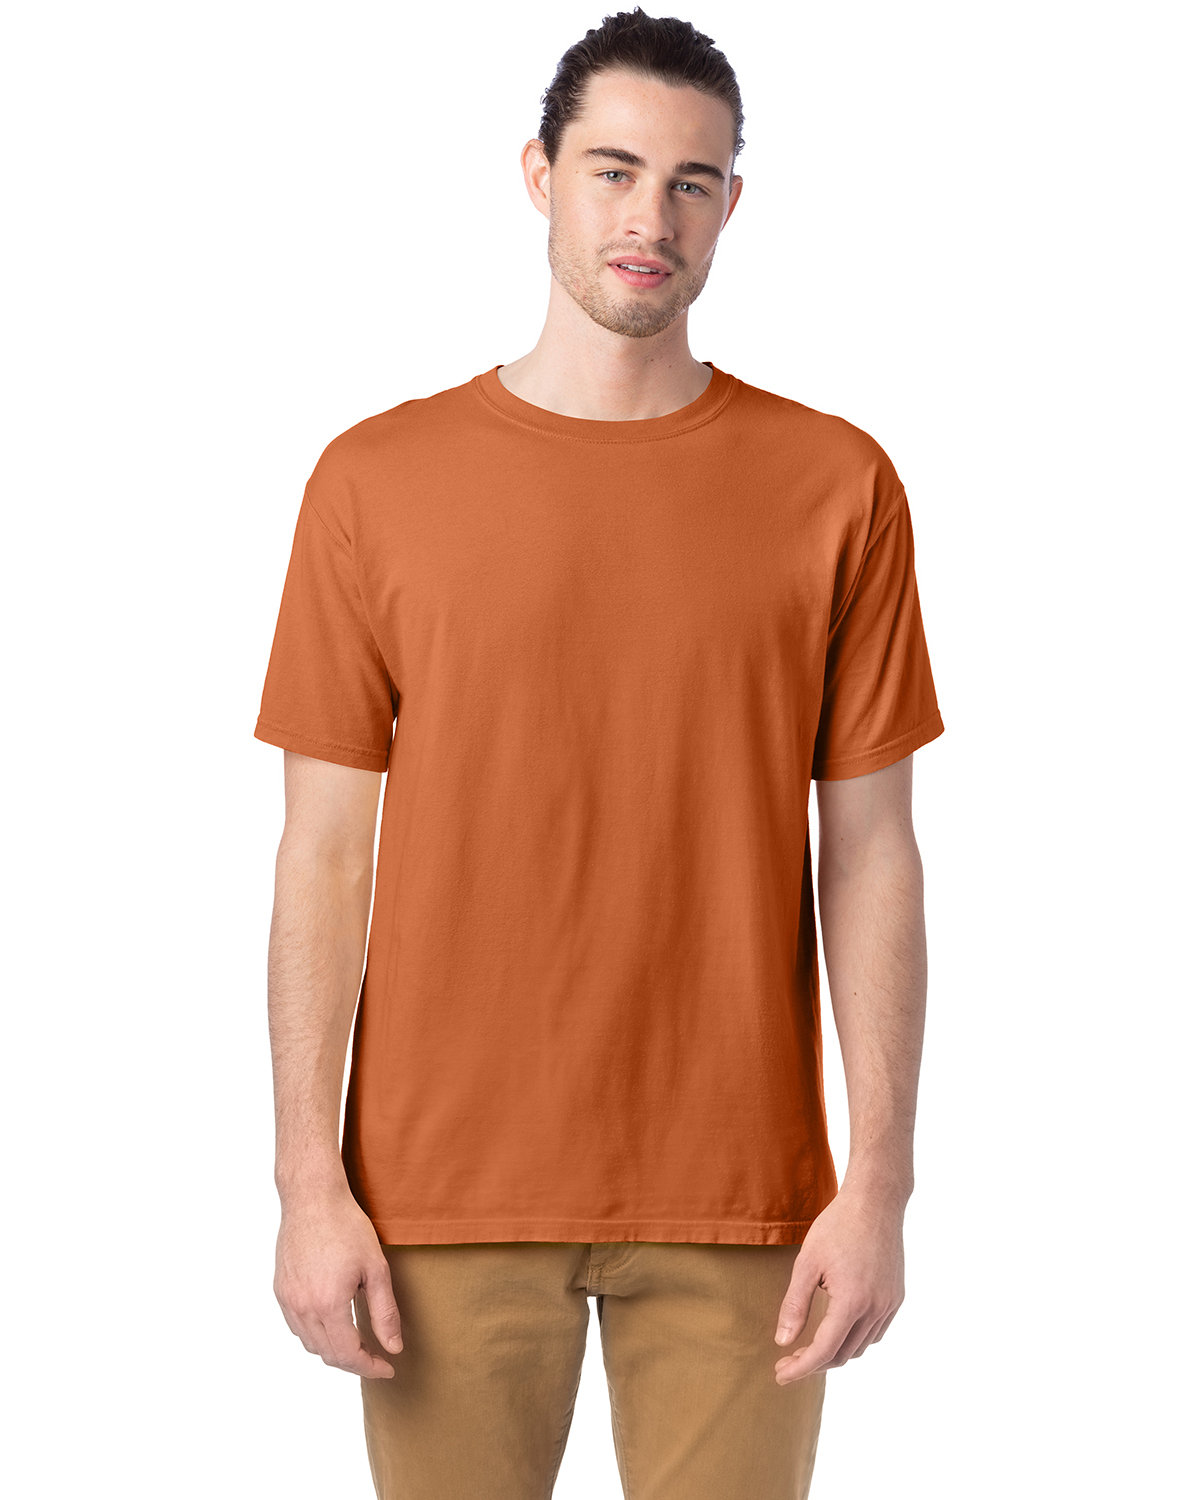 ComfortWash by Hanes Men's Garment-Dyed T-Shirt TEXAS ORANGE 